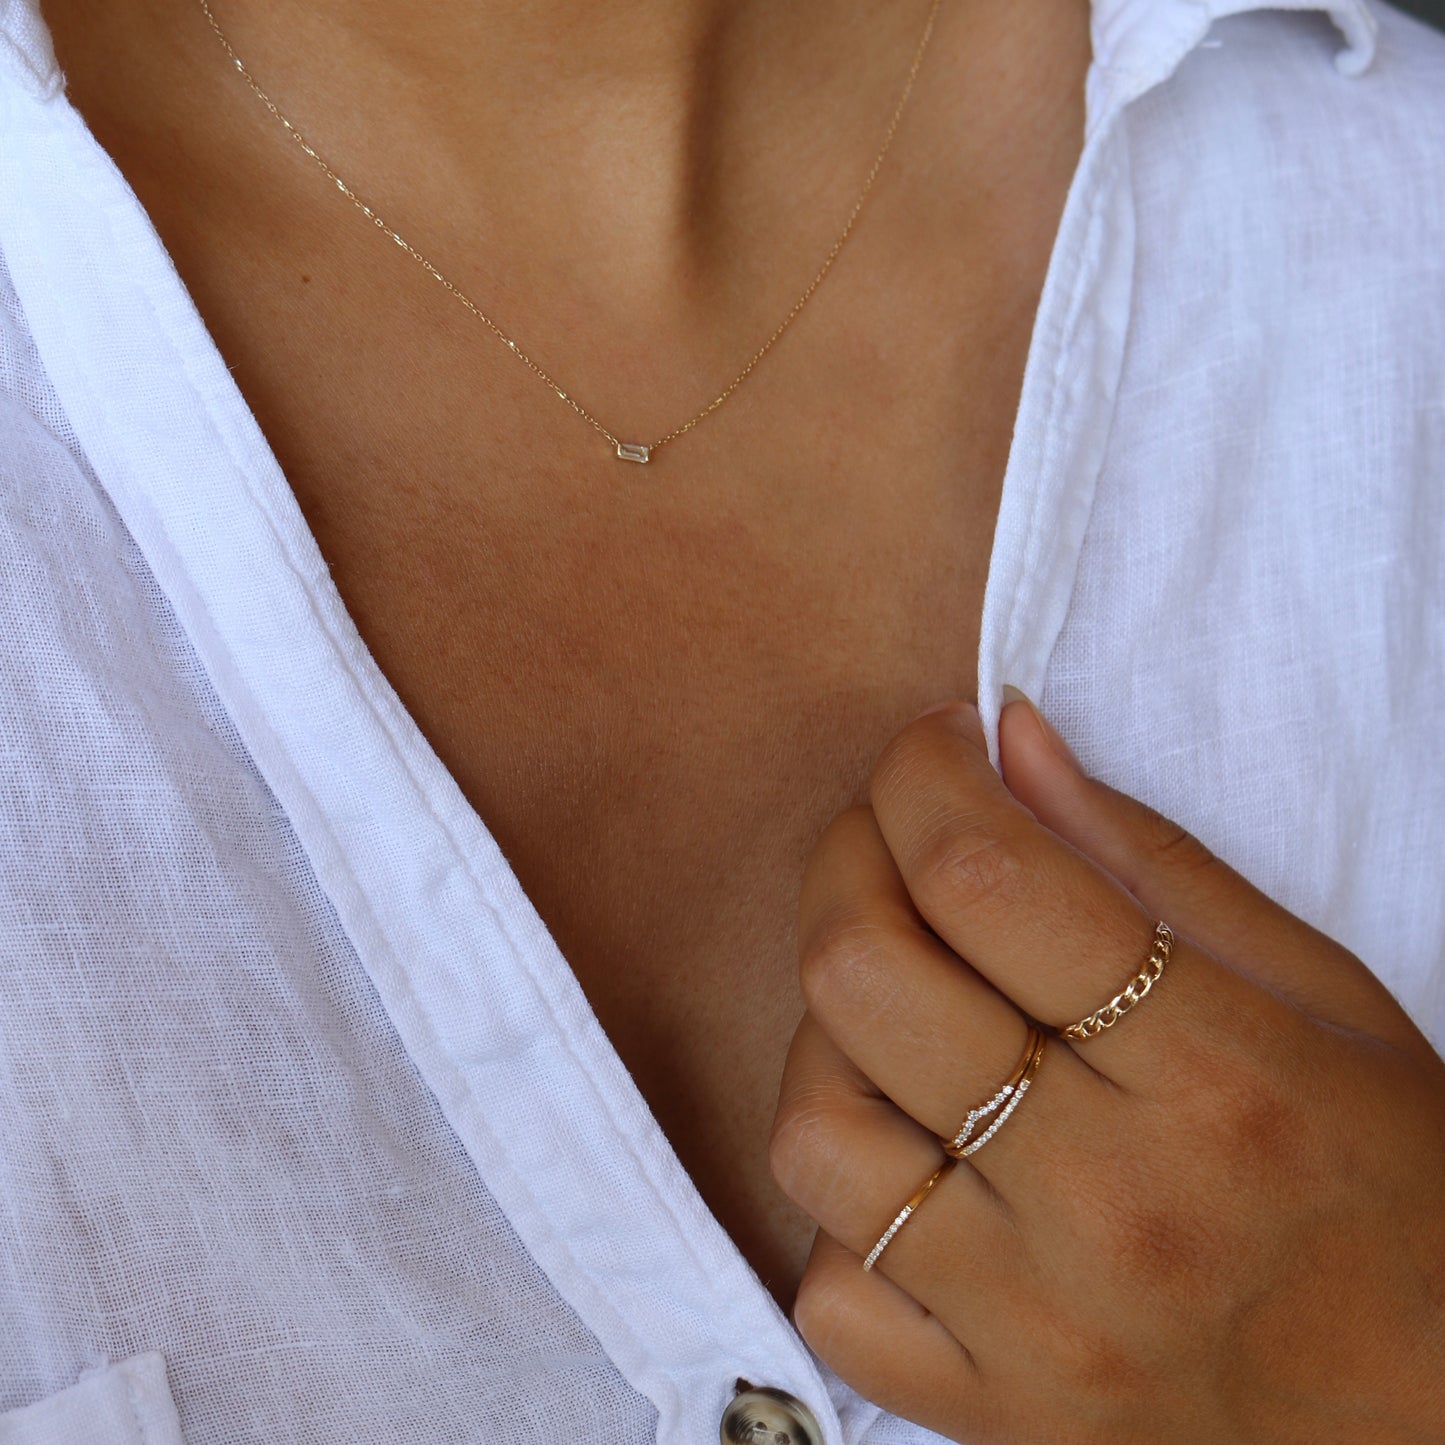 Topaz necklace, dainty topaz necklace, white topaz necklace, dainty white topaz gold necklace